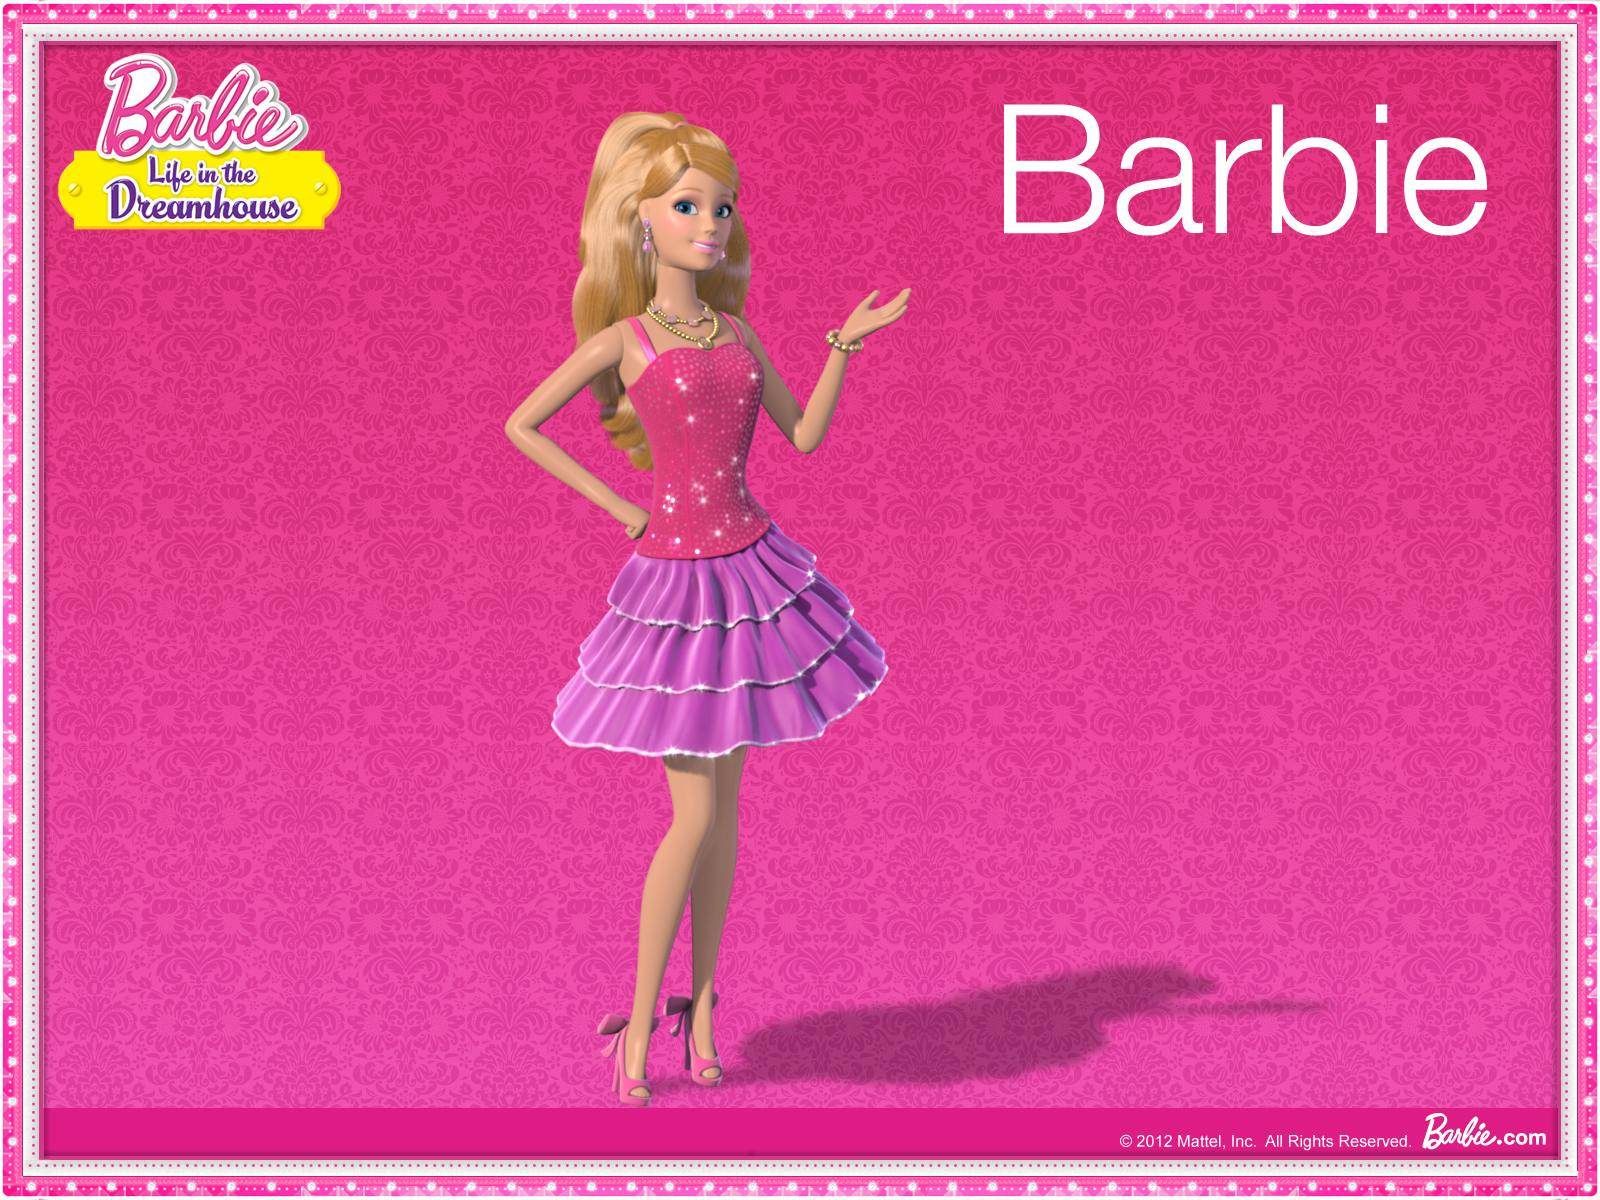 barbie live wallpaper,rosa,bambola,barbie,giocattolo